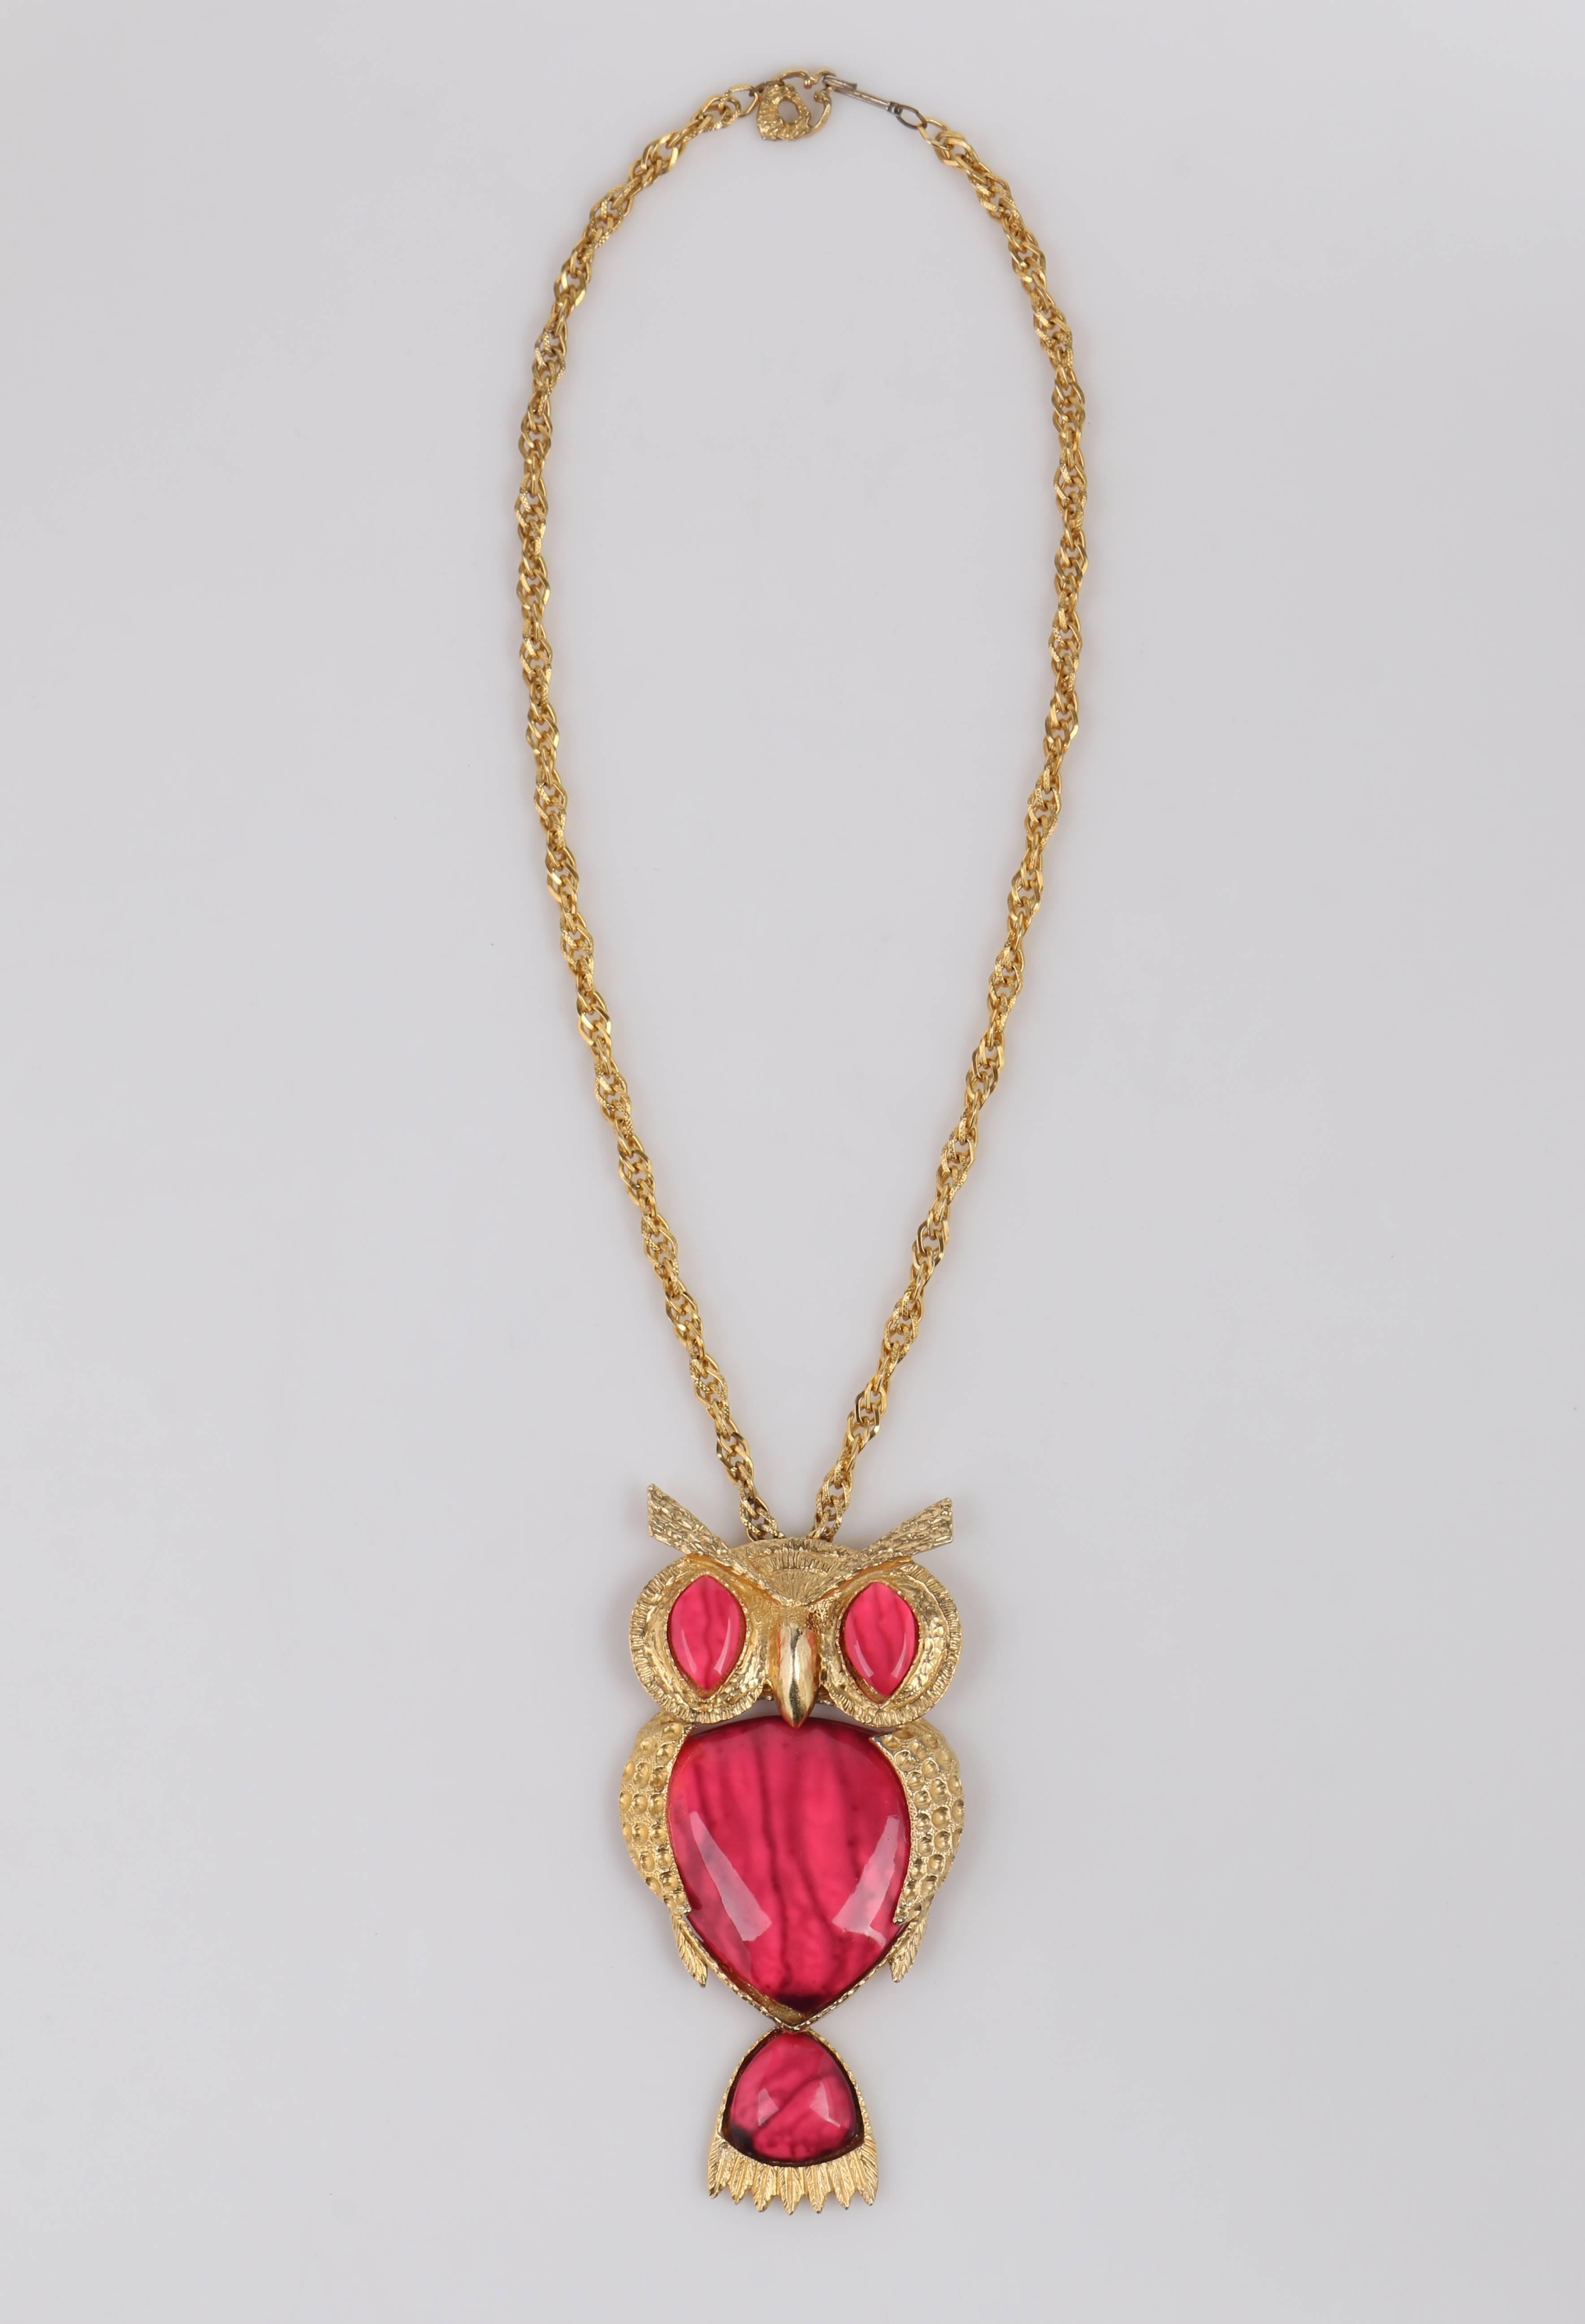 Women's JULIANA Delizza & Elster c.1970's Large Gold Pink Cabochon Owl Pendant Necklace